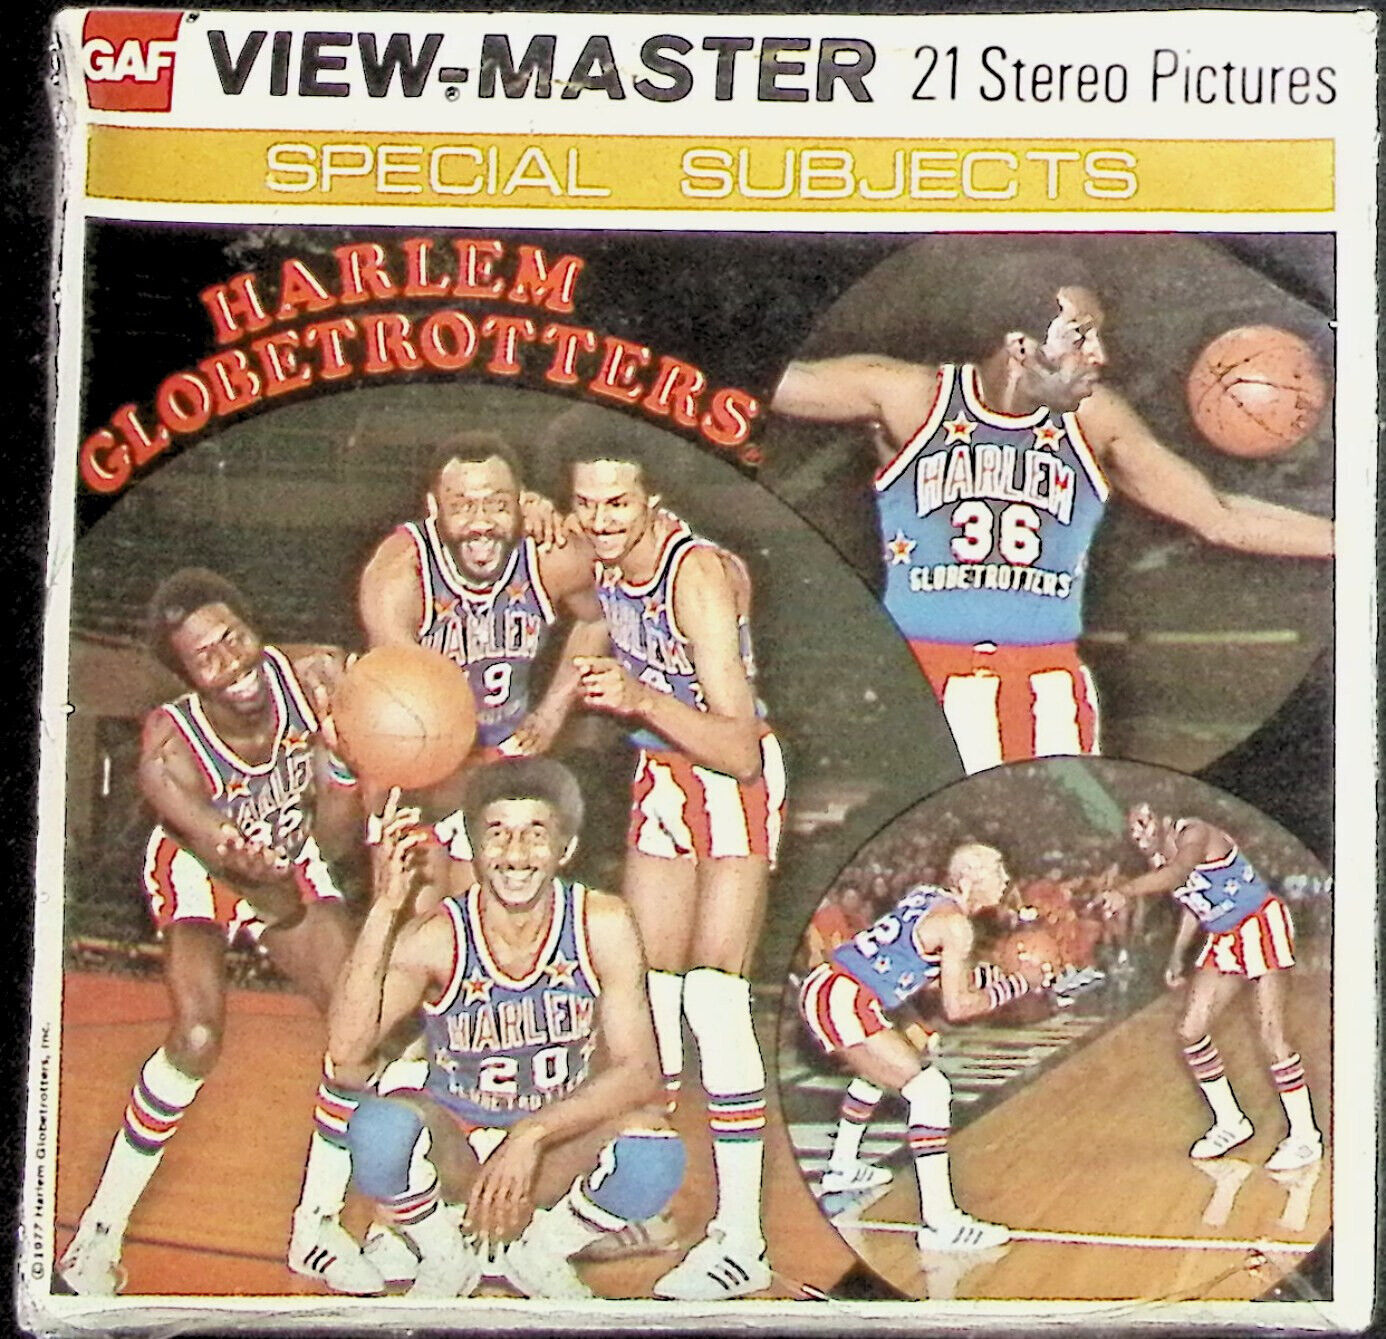 HARLEM GLOBETROTTERS BASKETBALL 1977 3d View-Master 3 Reel Packet NEW SEALED